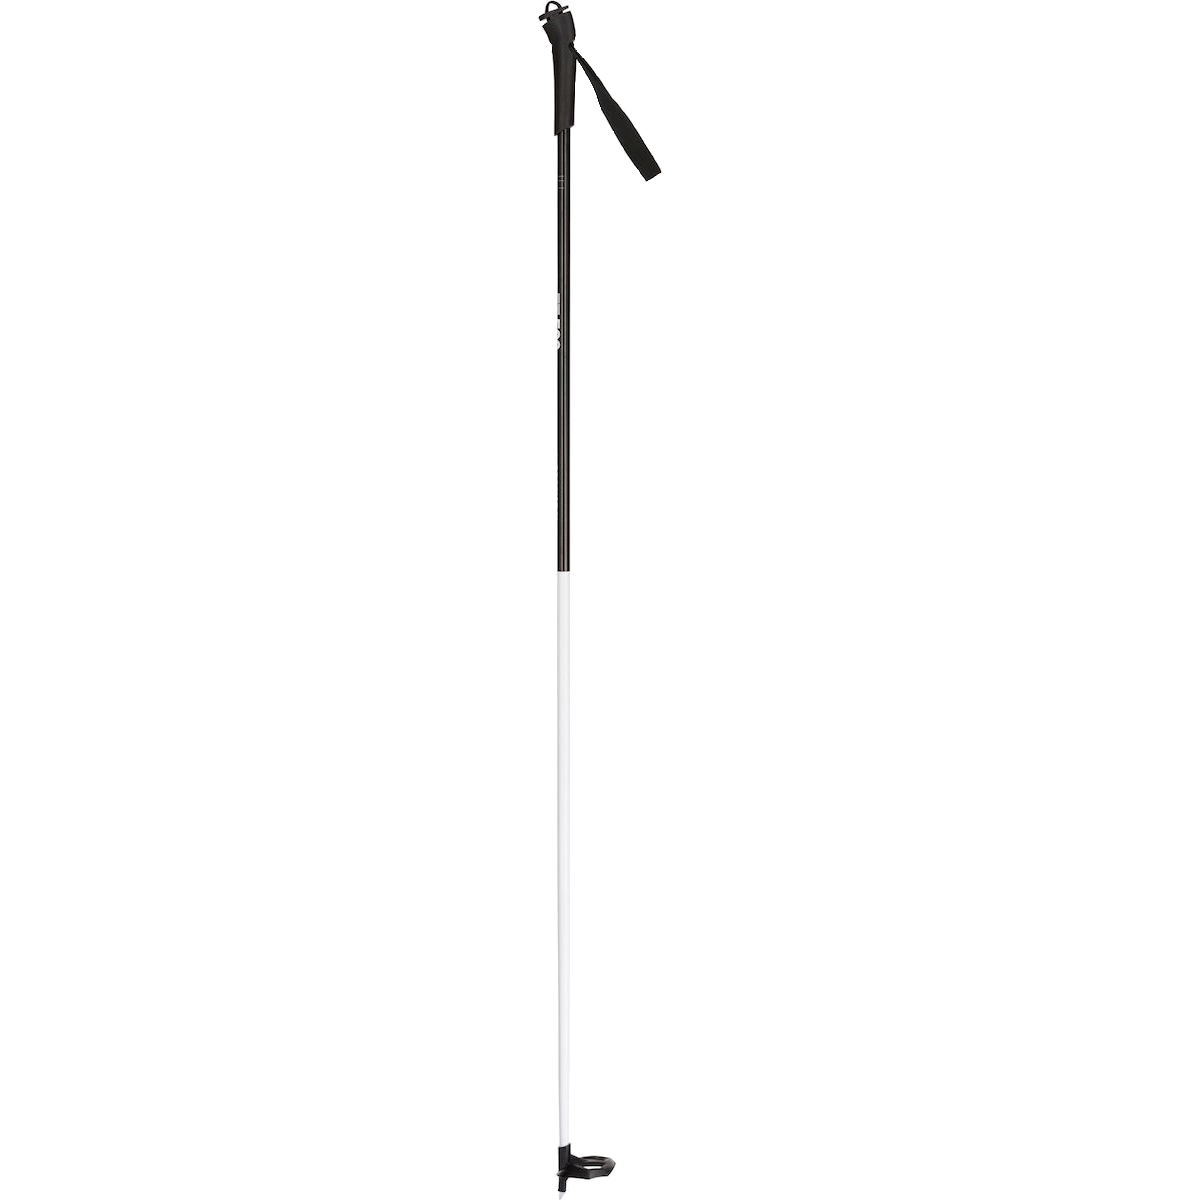 A single black and white ski pole with a wrist strap